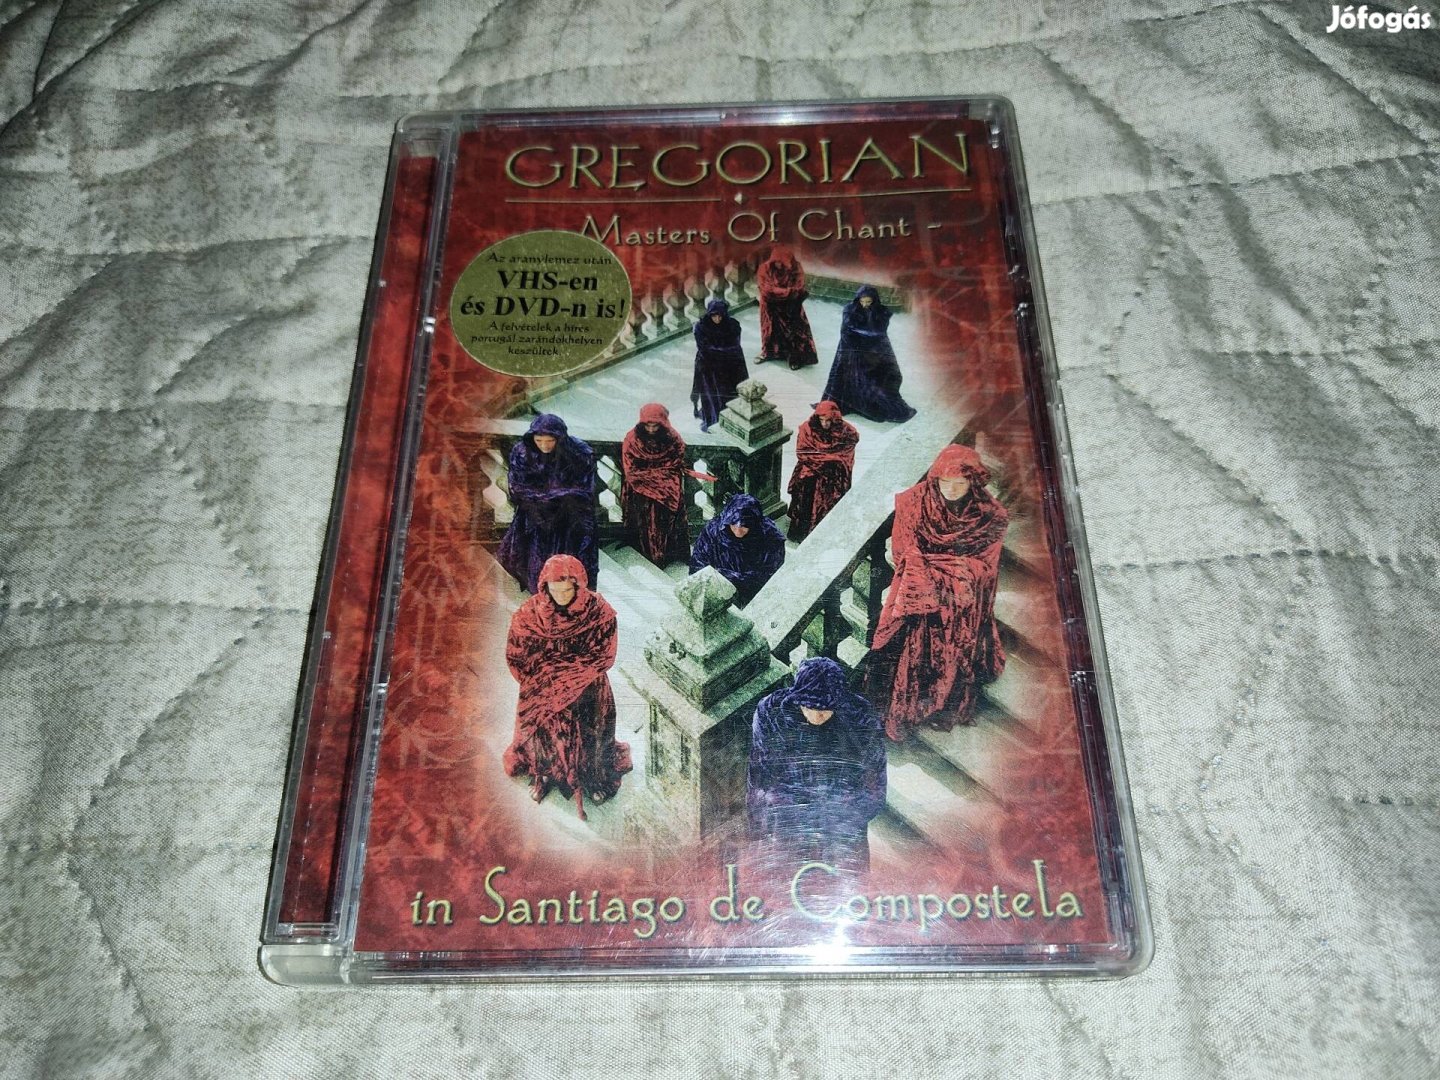 Gregorian Master Of Chant Vol.1 DVD (2001)